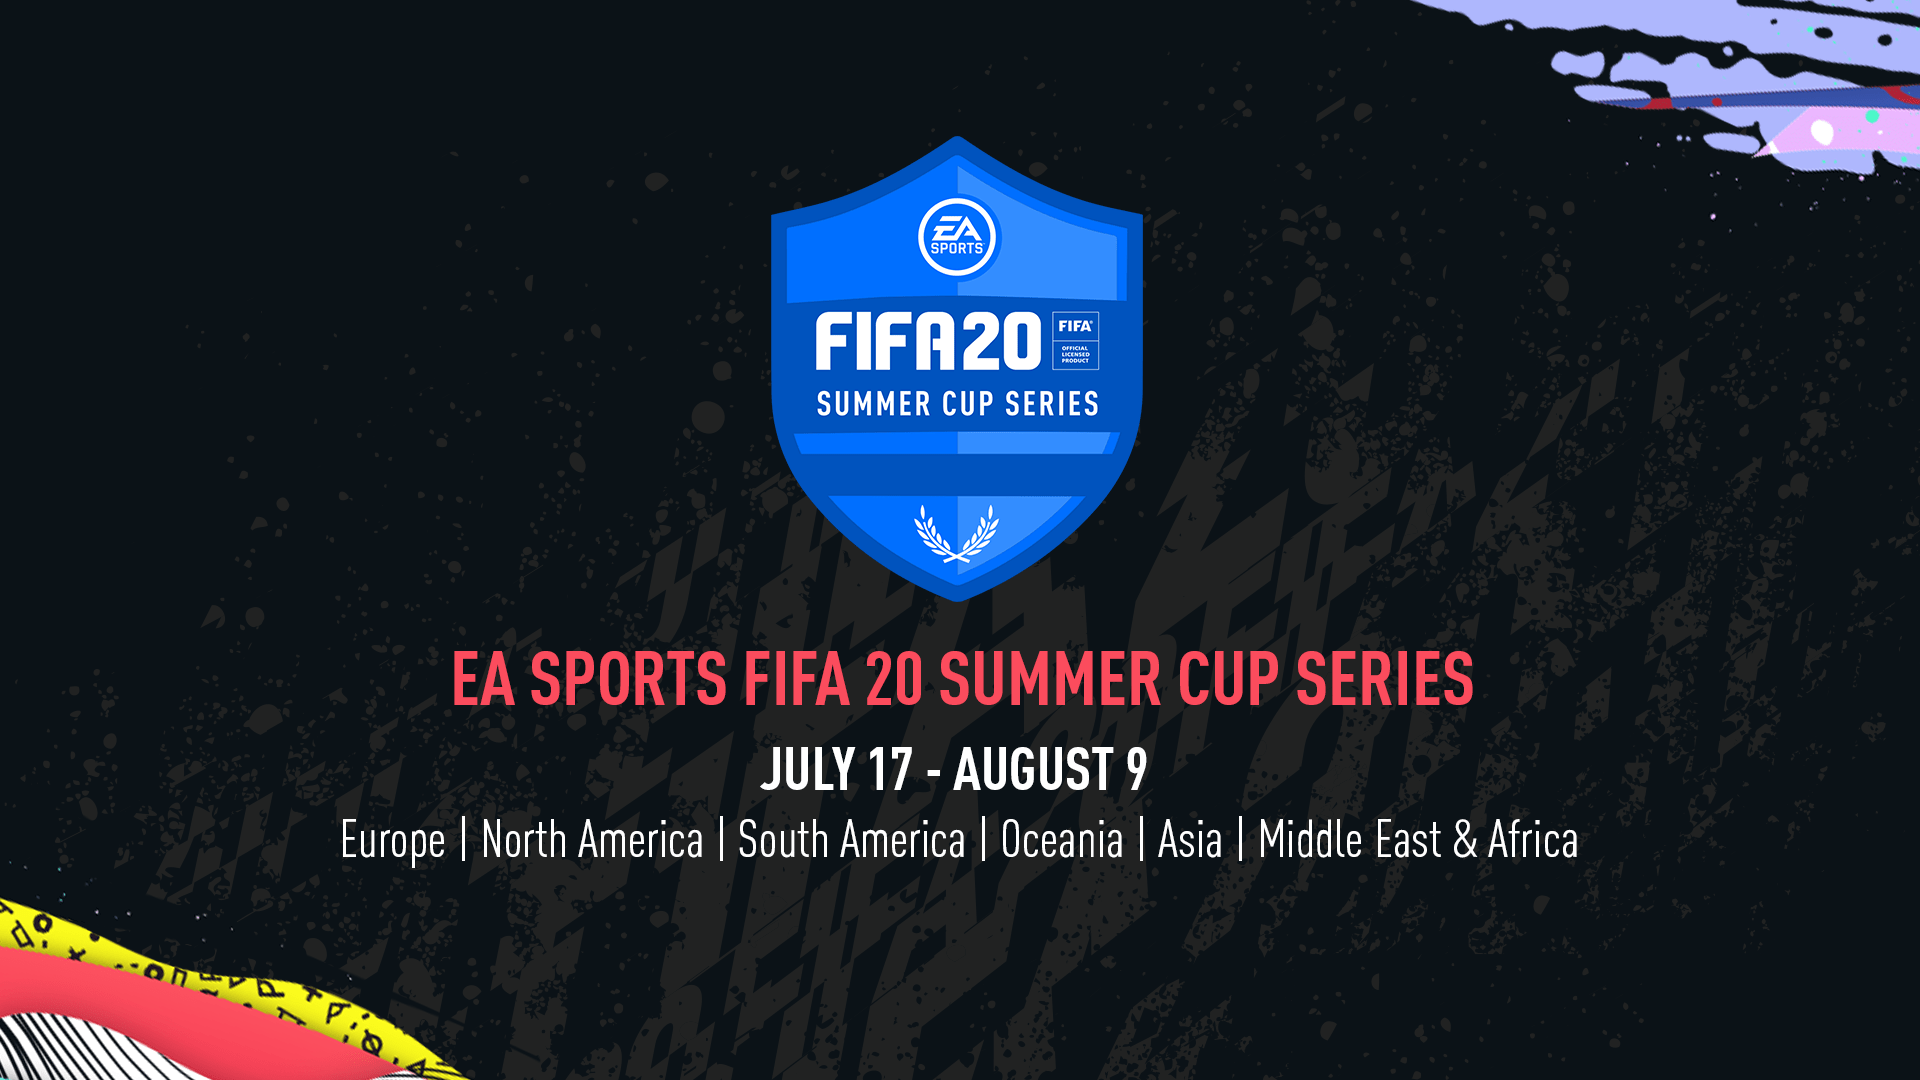 EA SPORTS FIFA 20 Summer Cup Series